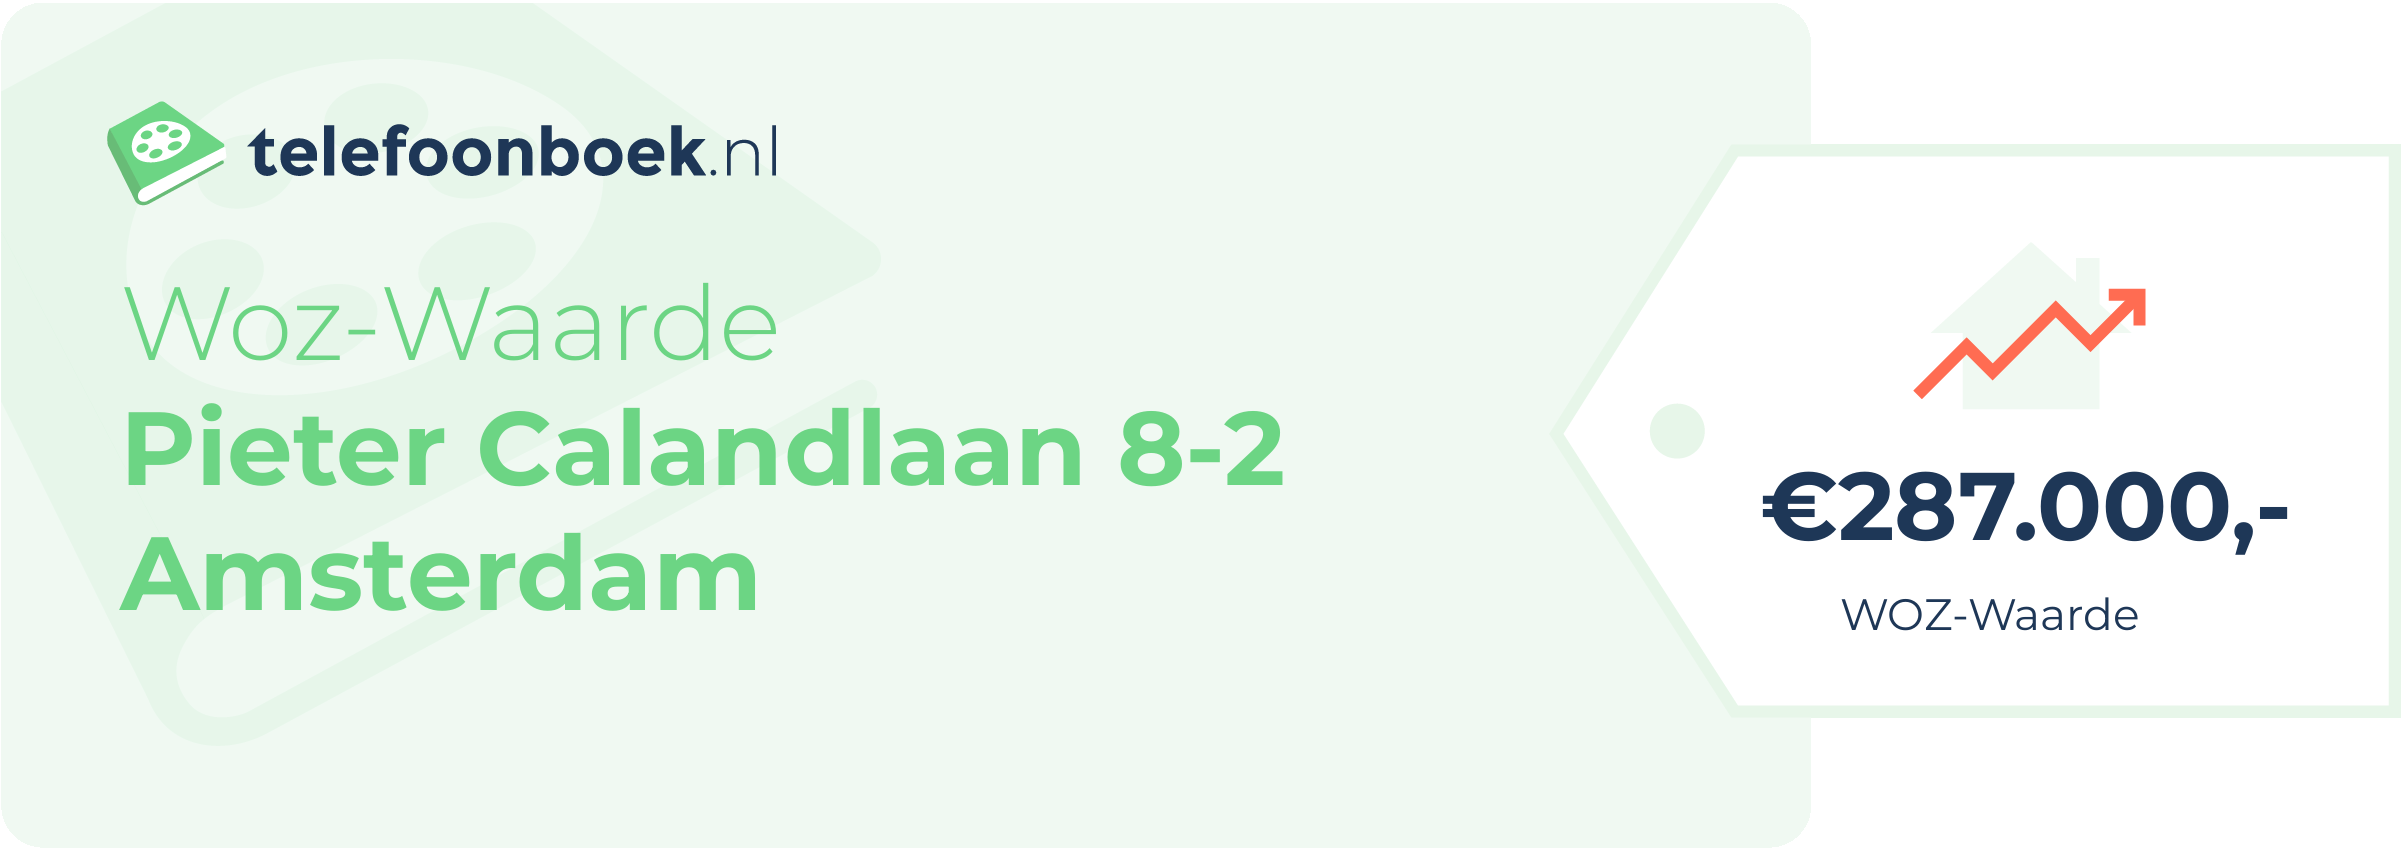 WOZ-waarde Pieter Calandlaan 8-2 Amsterdam